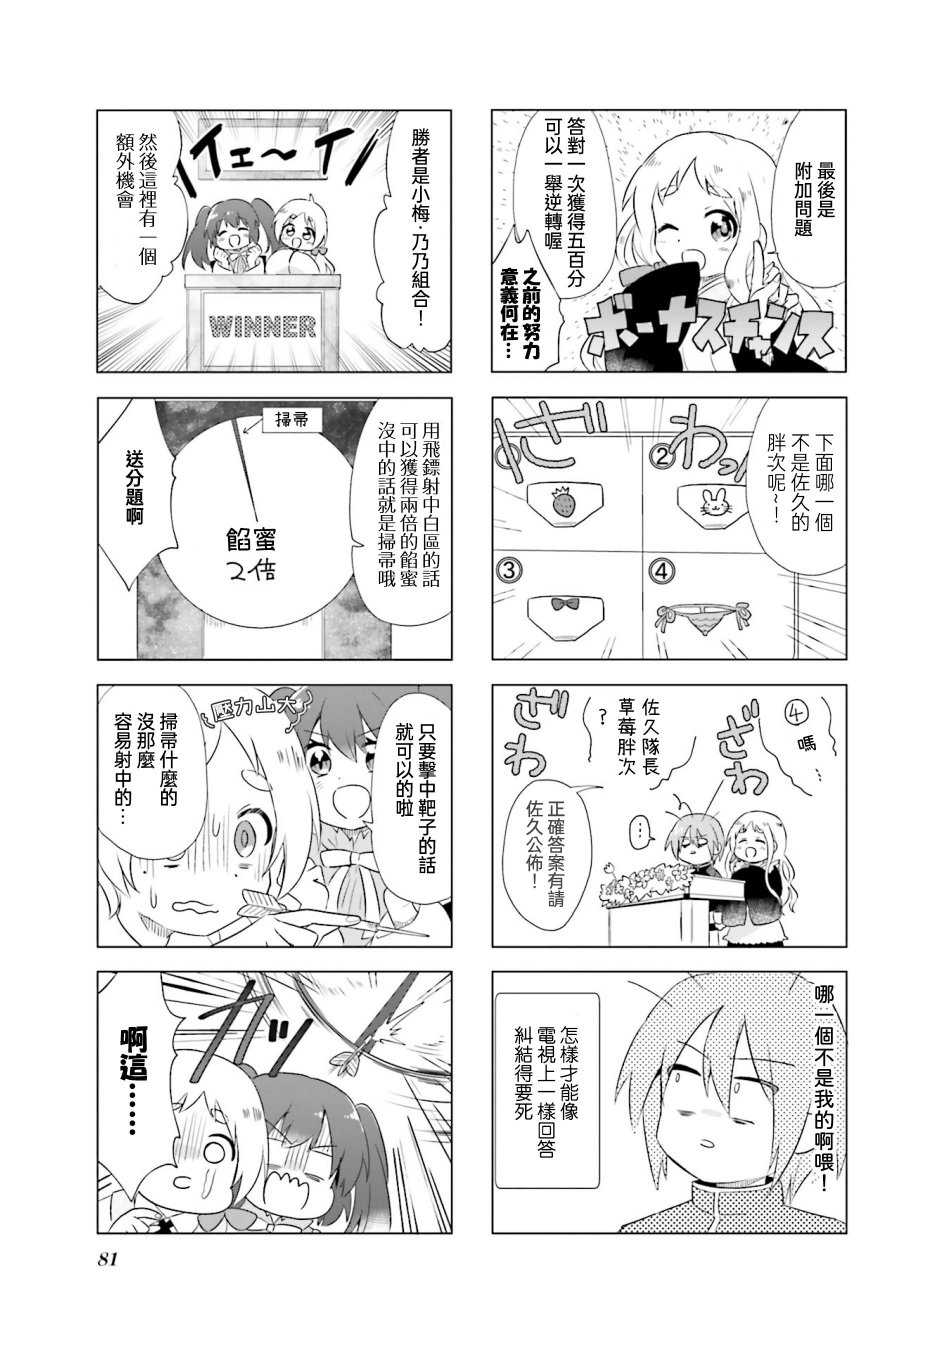 Urara迷路帖 漫画选集 - 第9话 - 1